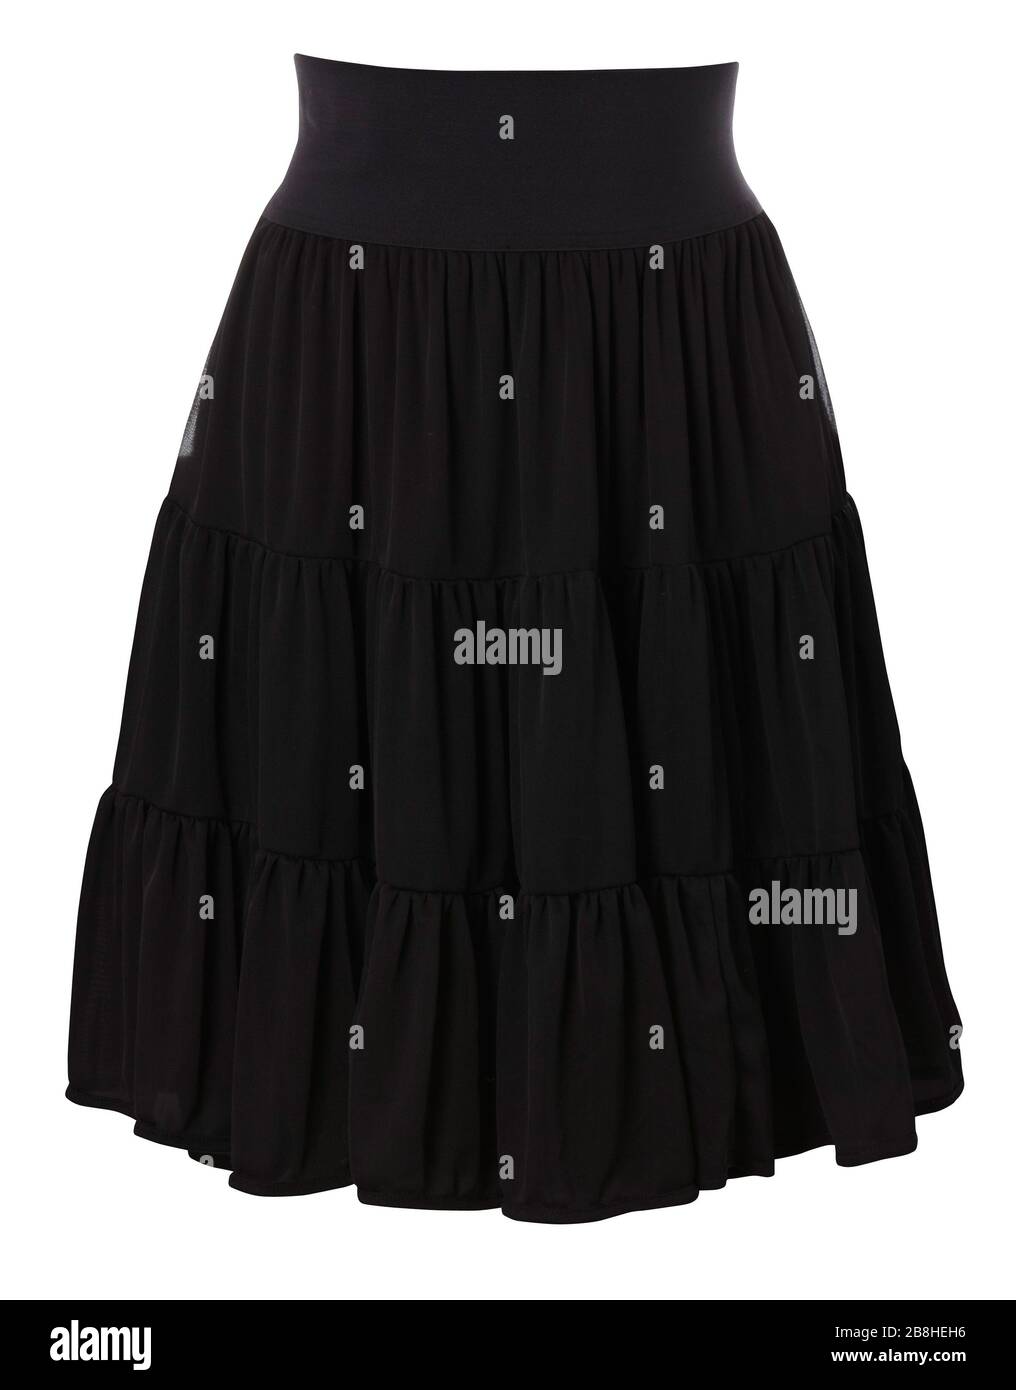 Luxury skirt isolated on the white background Stock Photo - Alamy